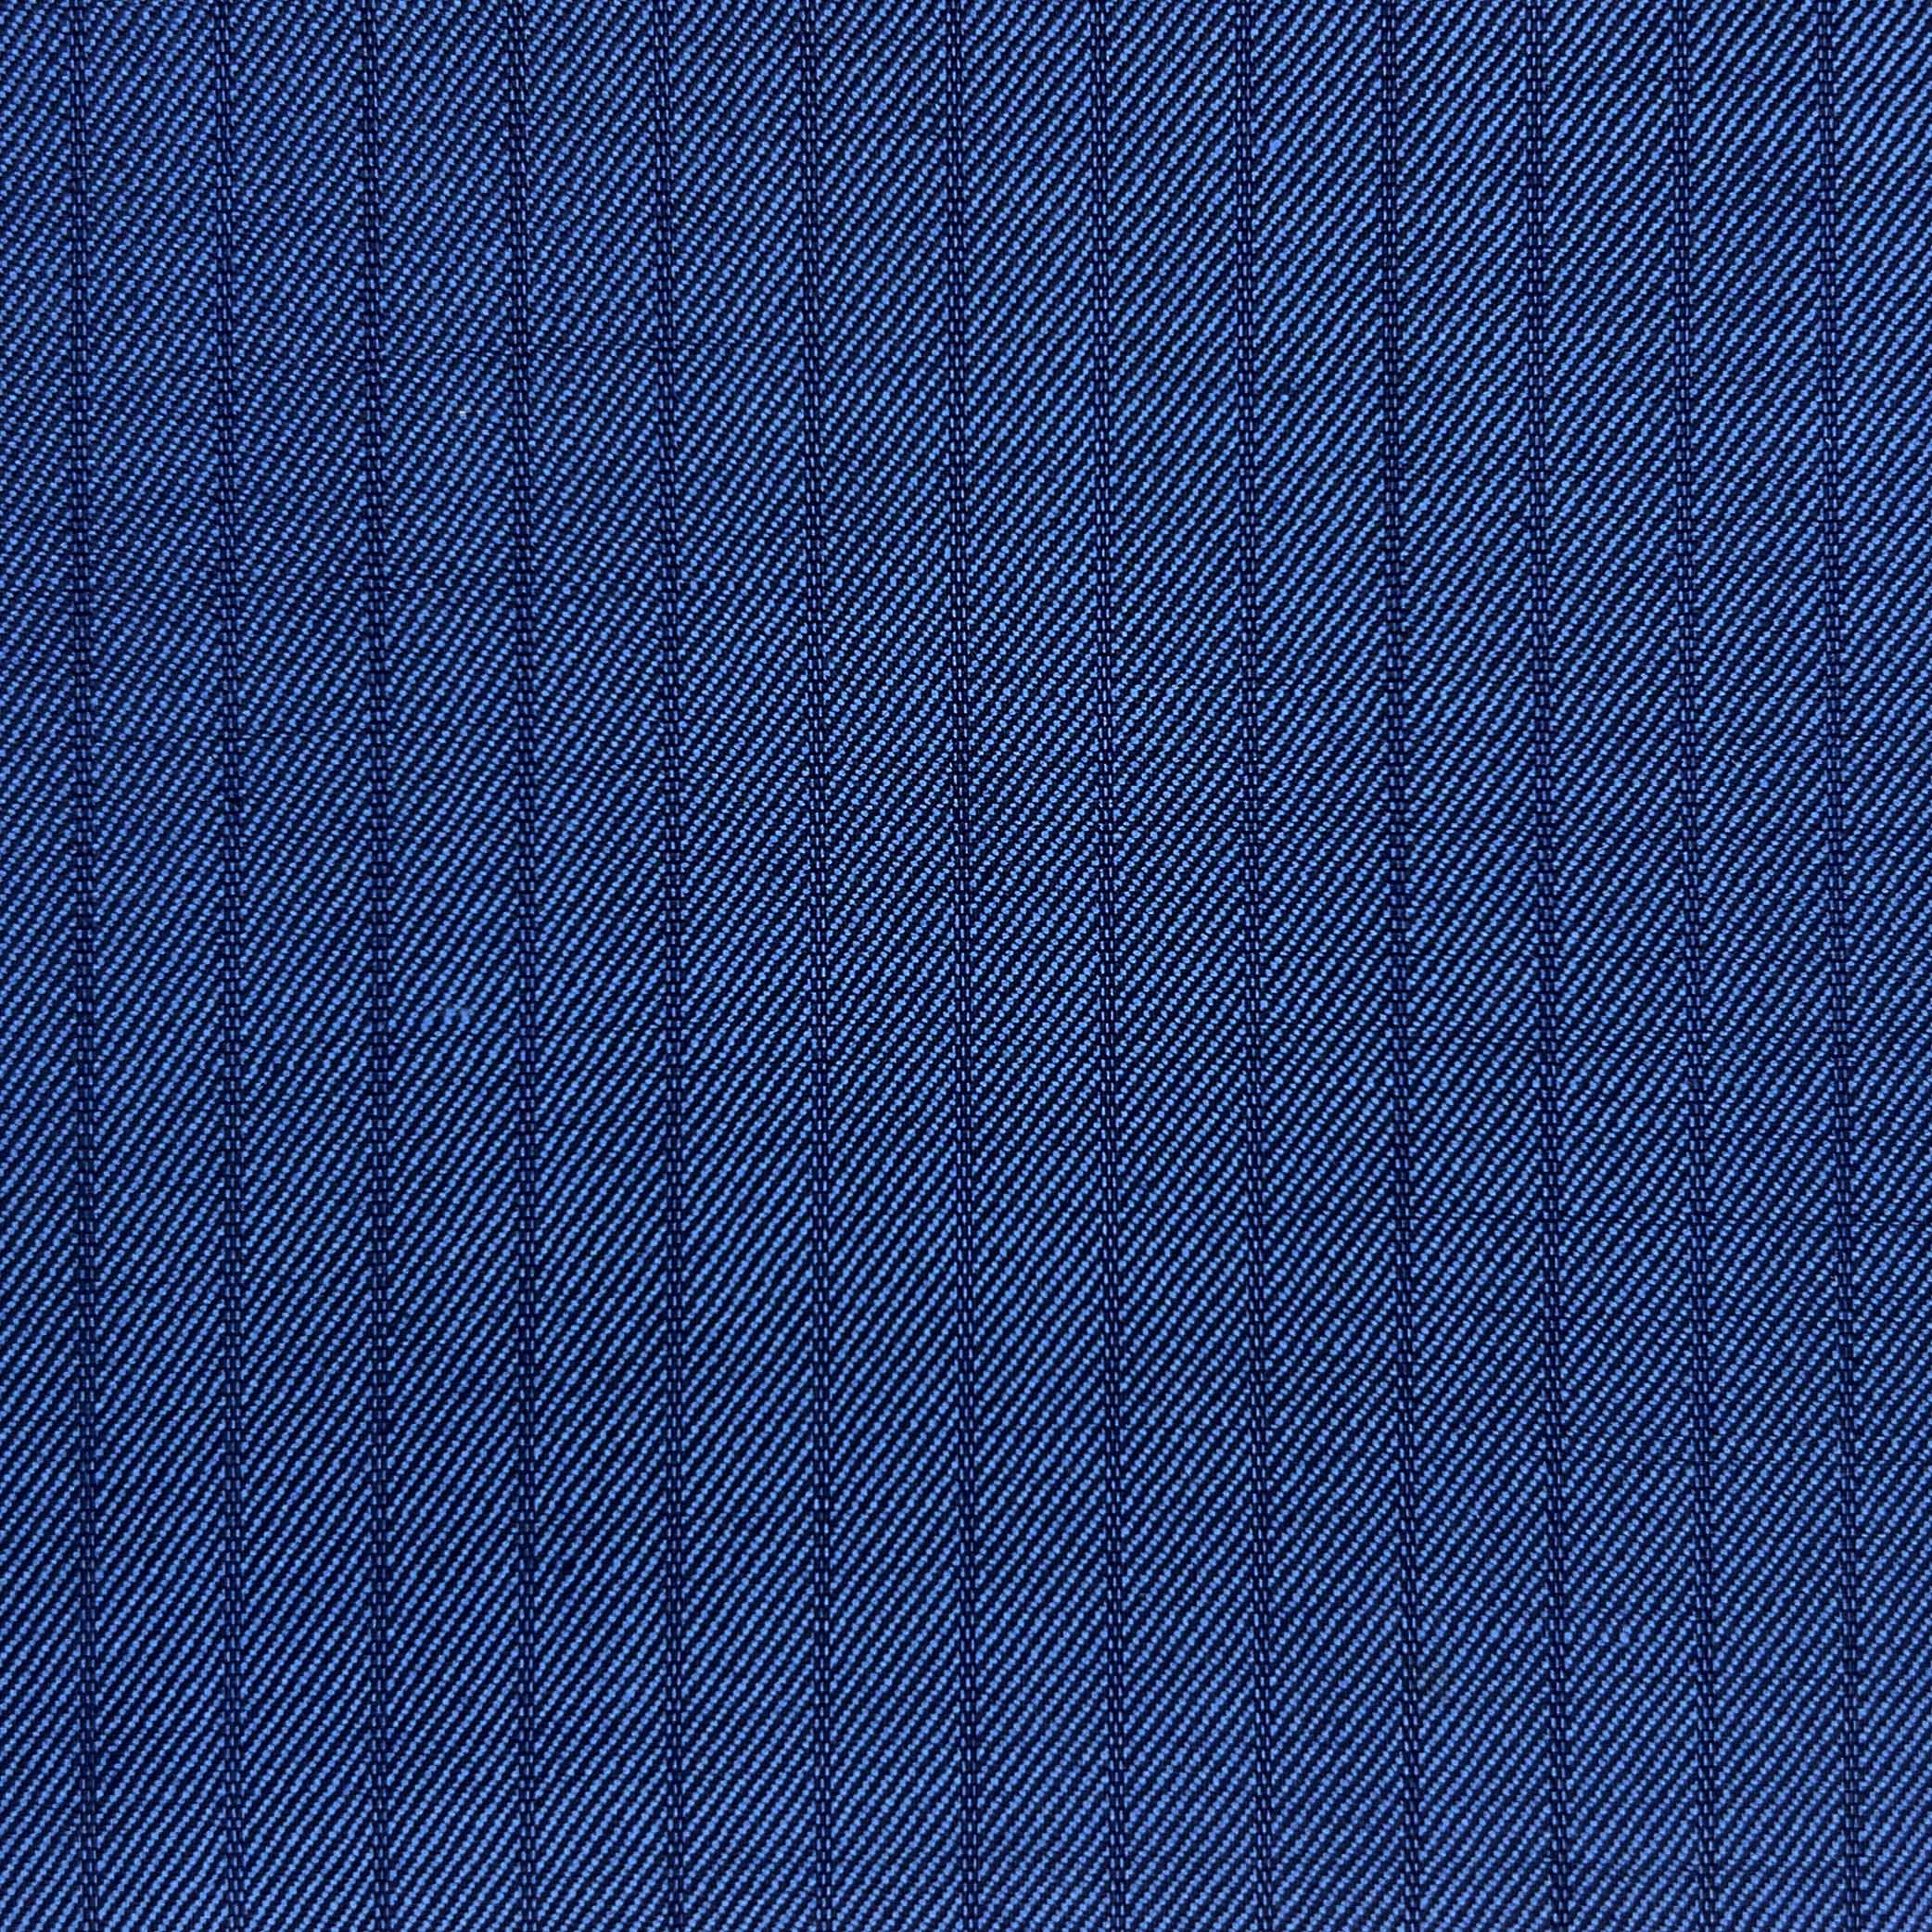 Westwood Hart Online Custom Hand Tailor Suits Sportcoats Trousers Waistcoats Overcoats Steel Blue Self Stripes Design